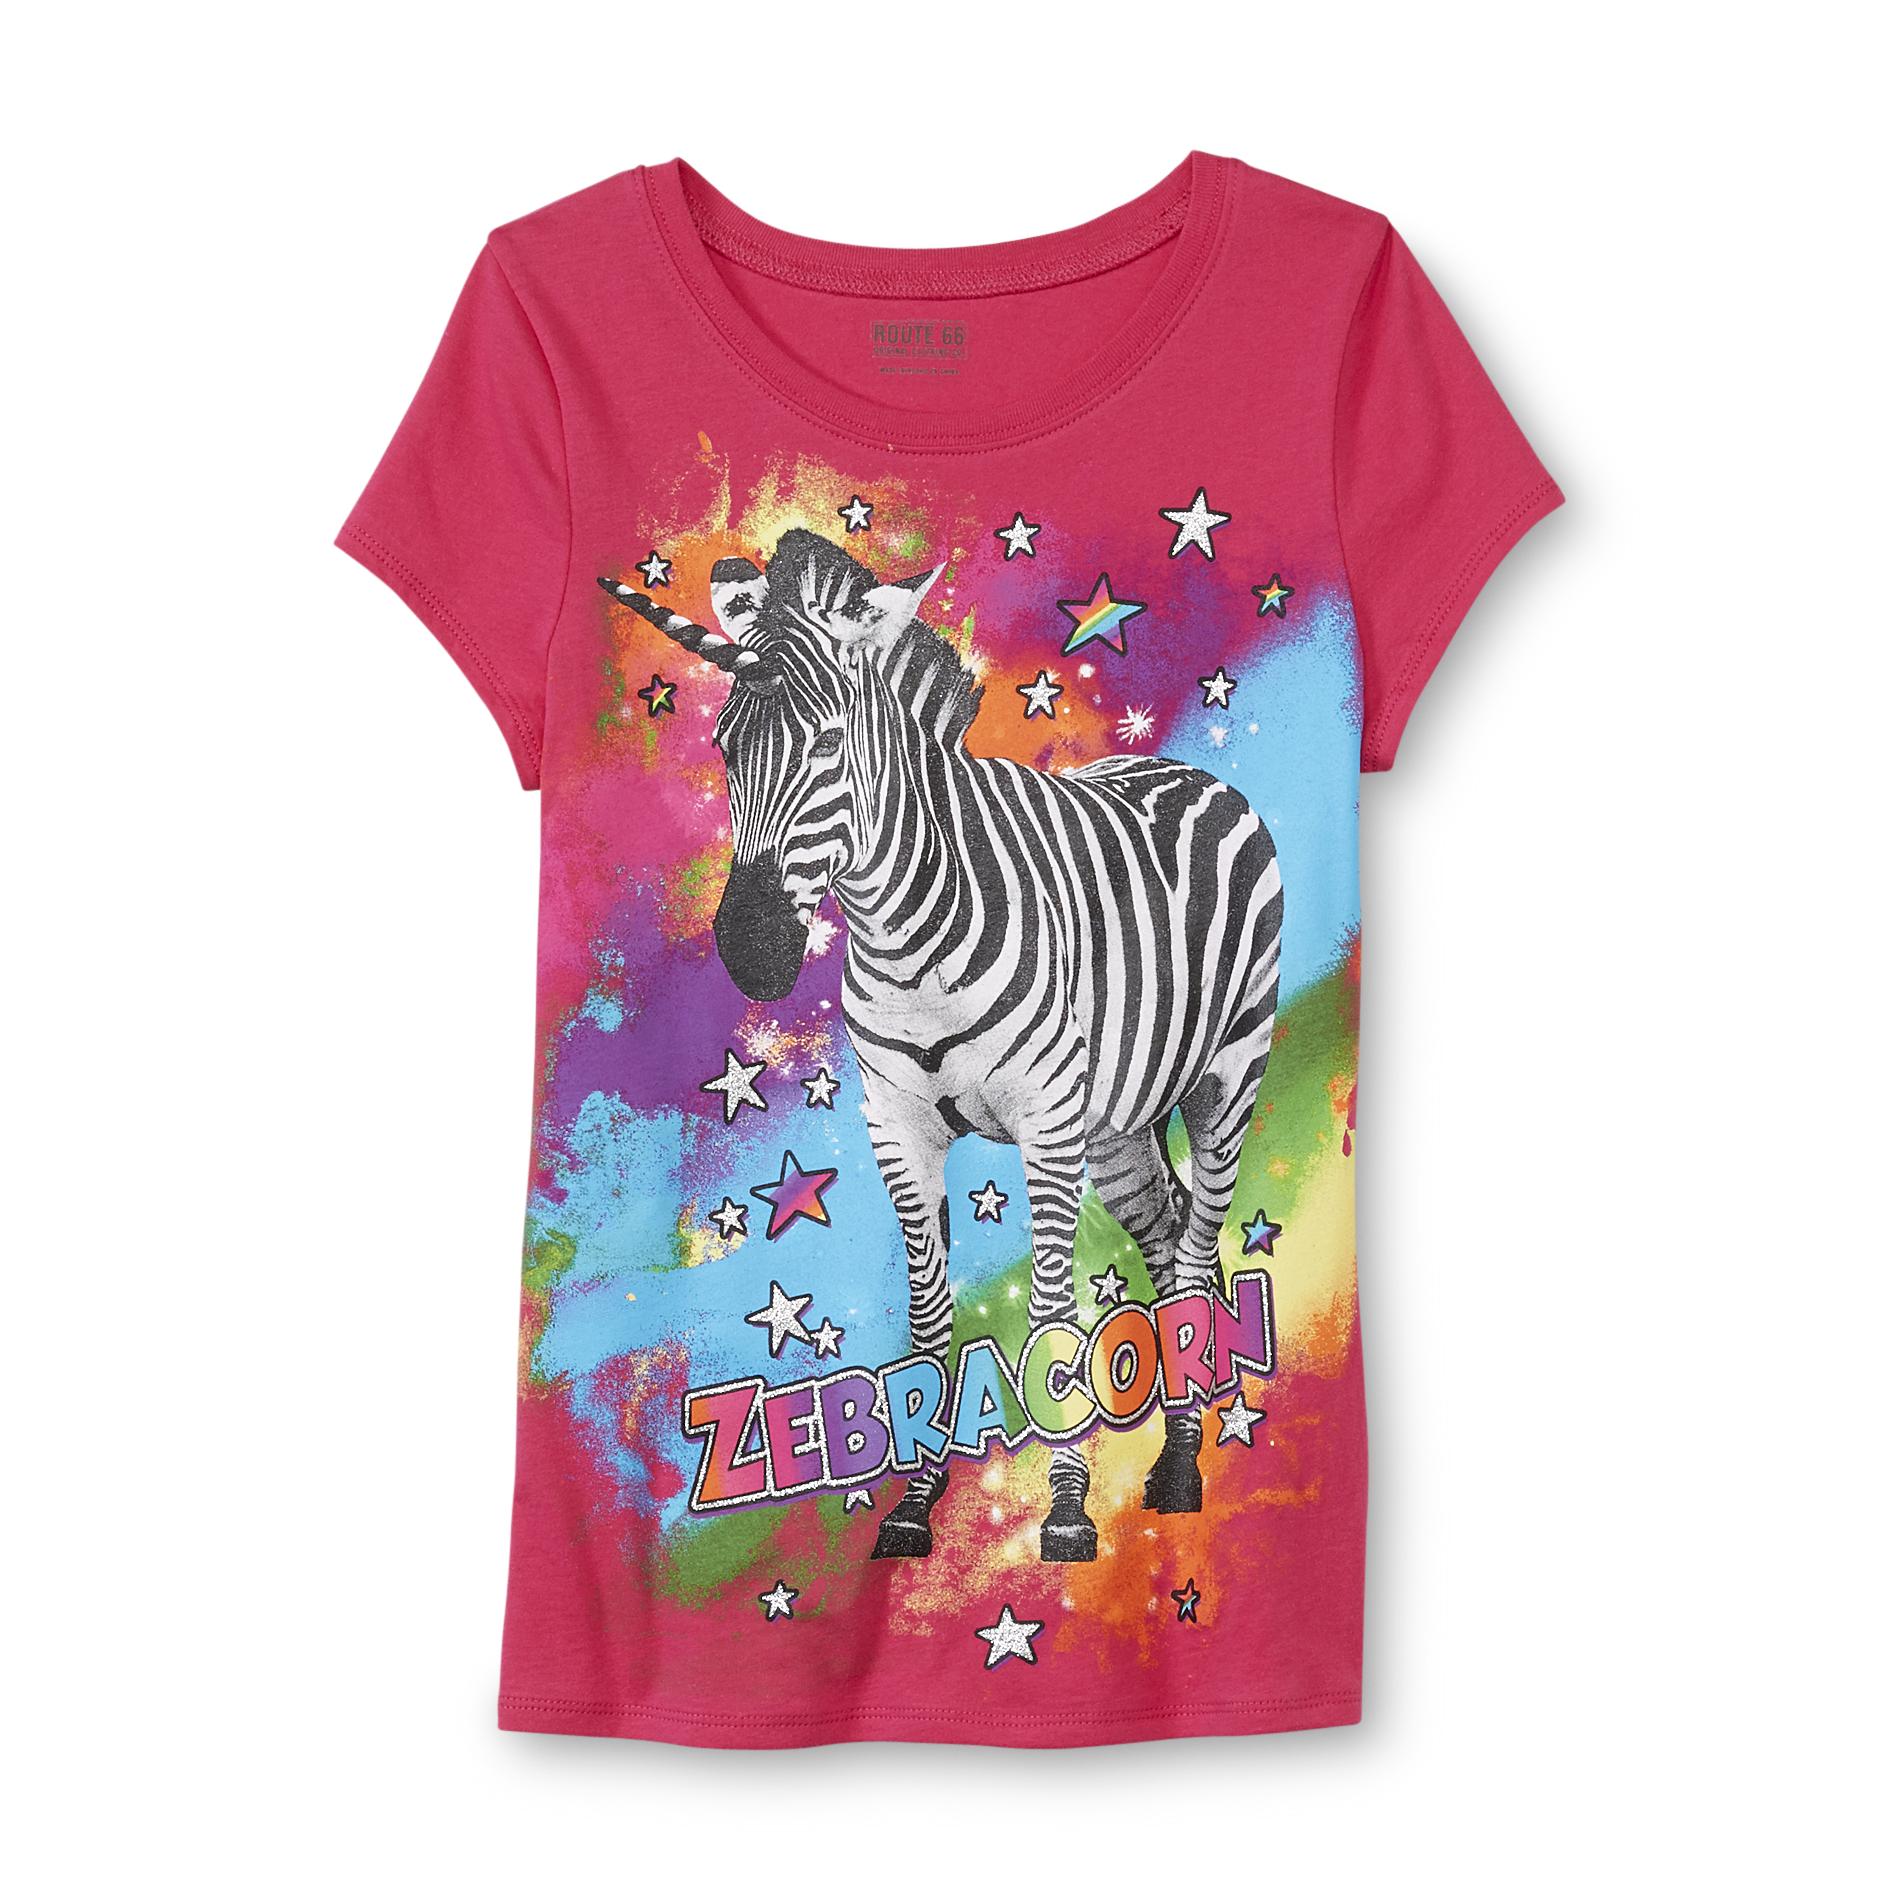 Route 66 Girl's Graphic T-Shirt - Zebra Unicorn